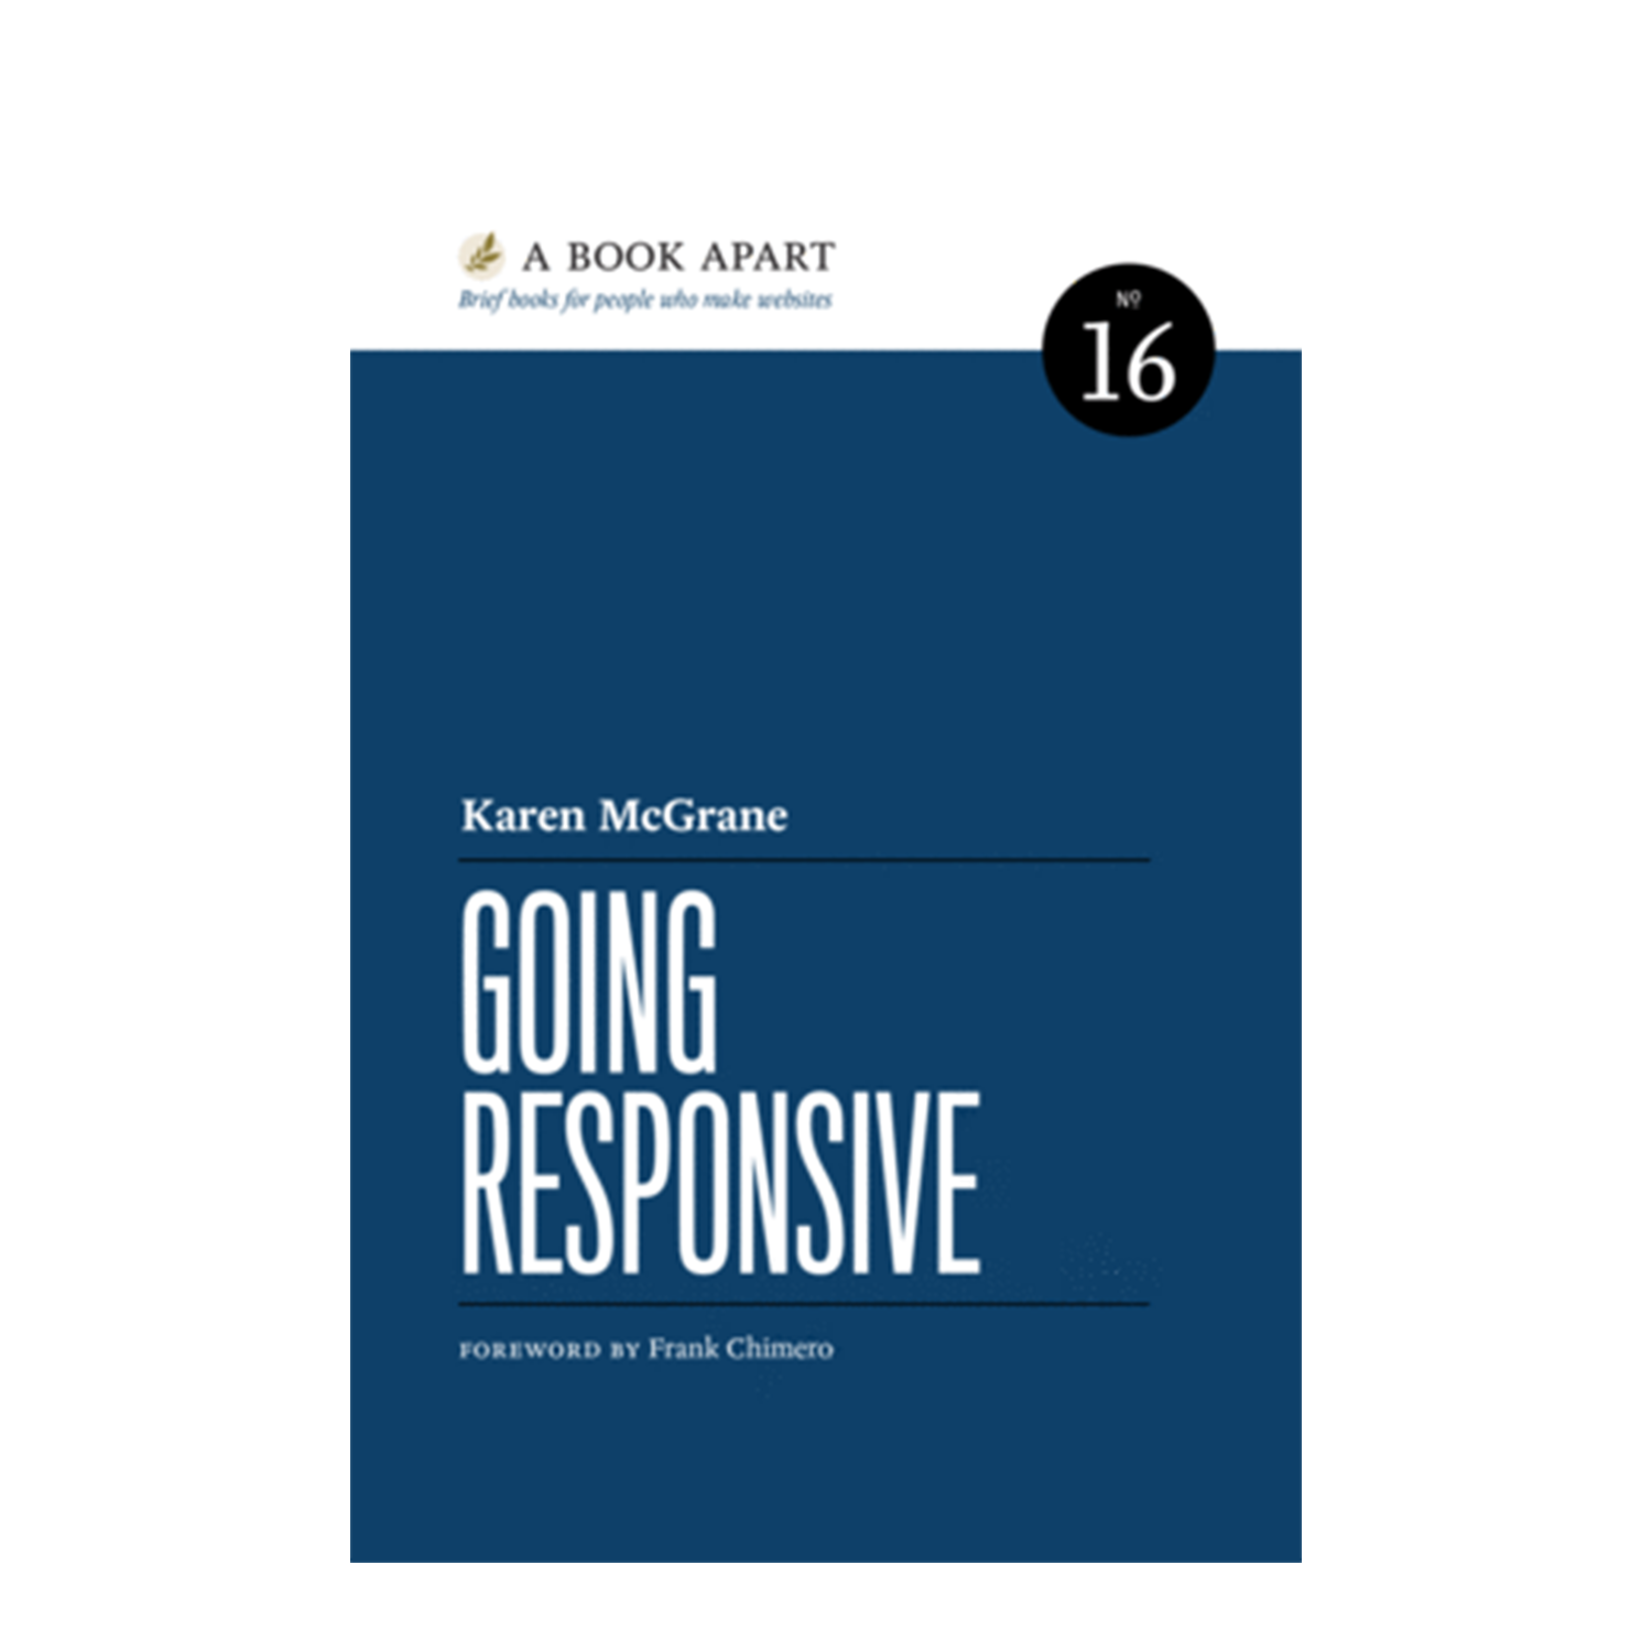 A Book Apart: Going Responsive (No. 16)